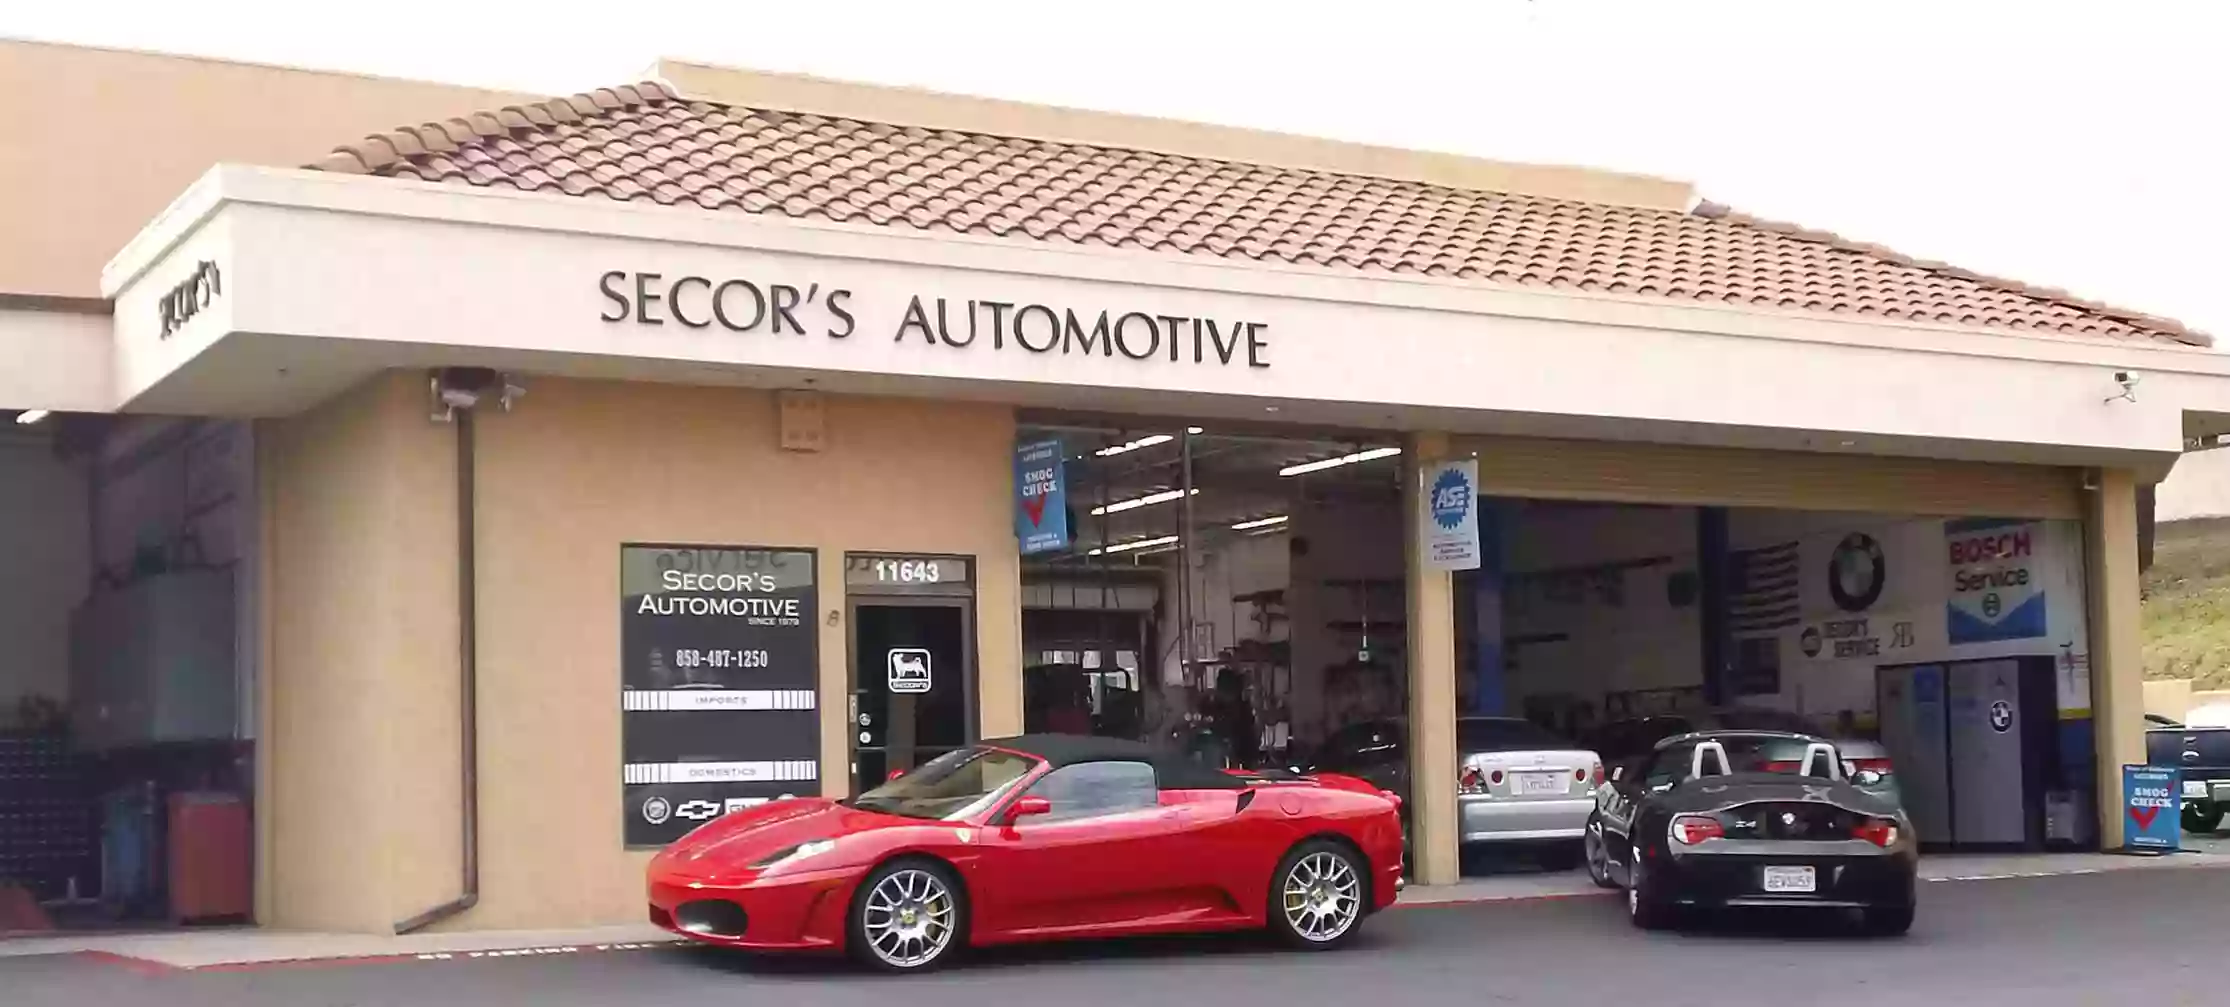 Secor's Automotive